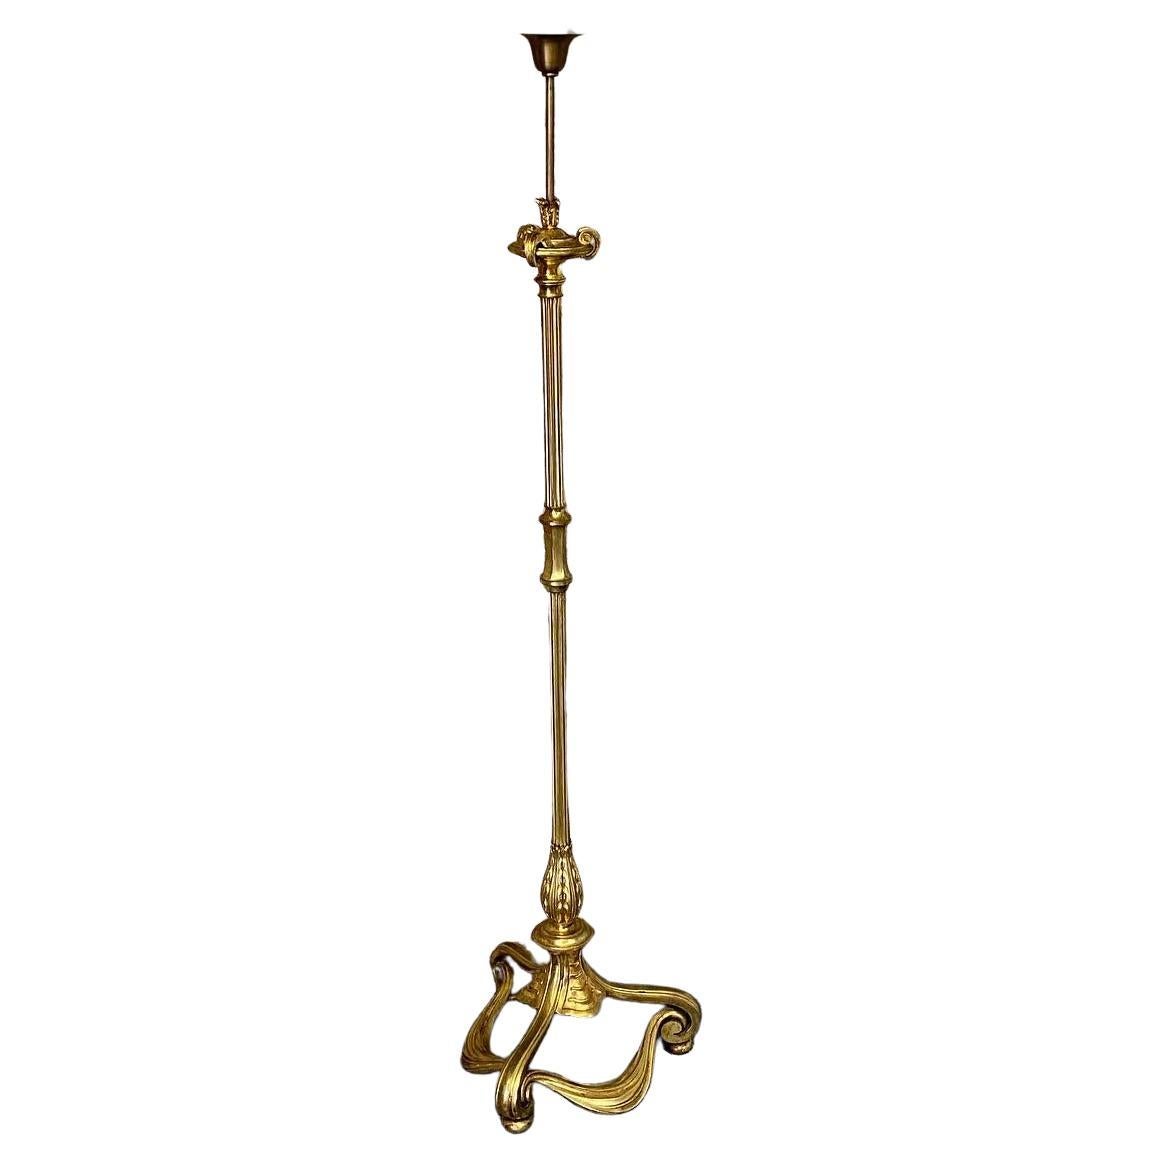 Wonderful Quality French Brass Standard Lamp